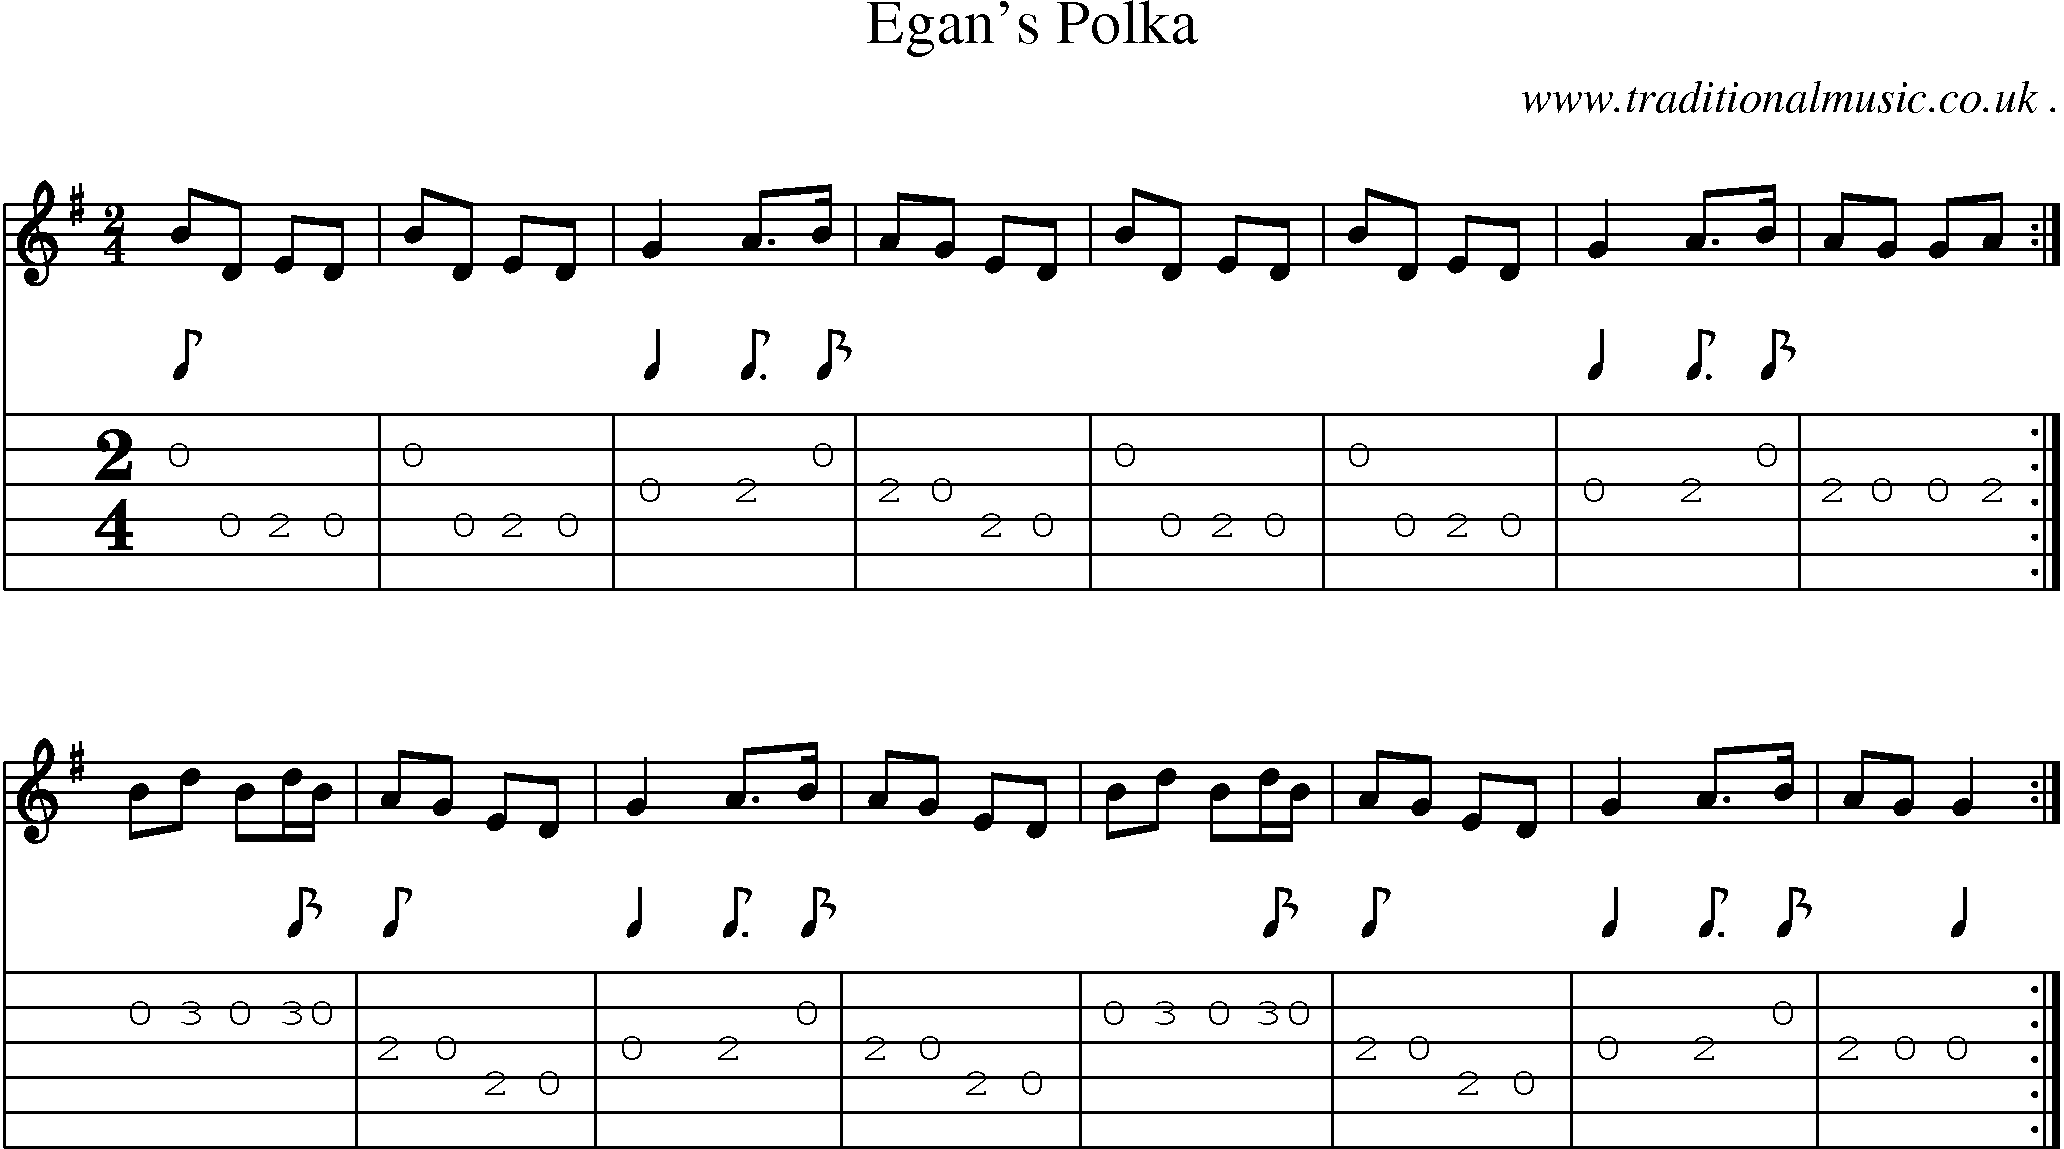 Sheet-Music and Guitar Tabs for Egans Polka